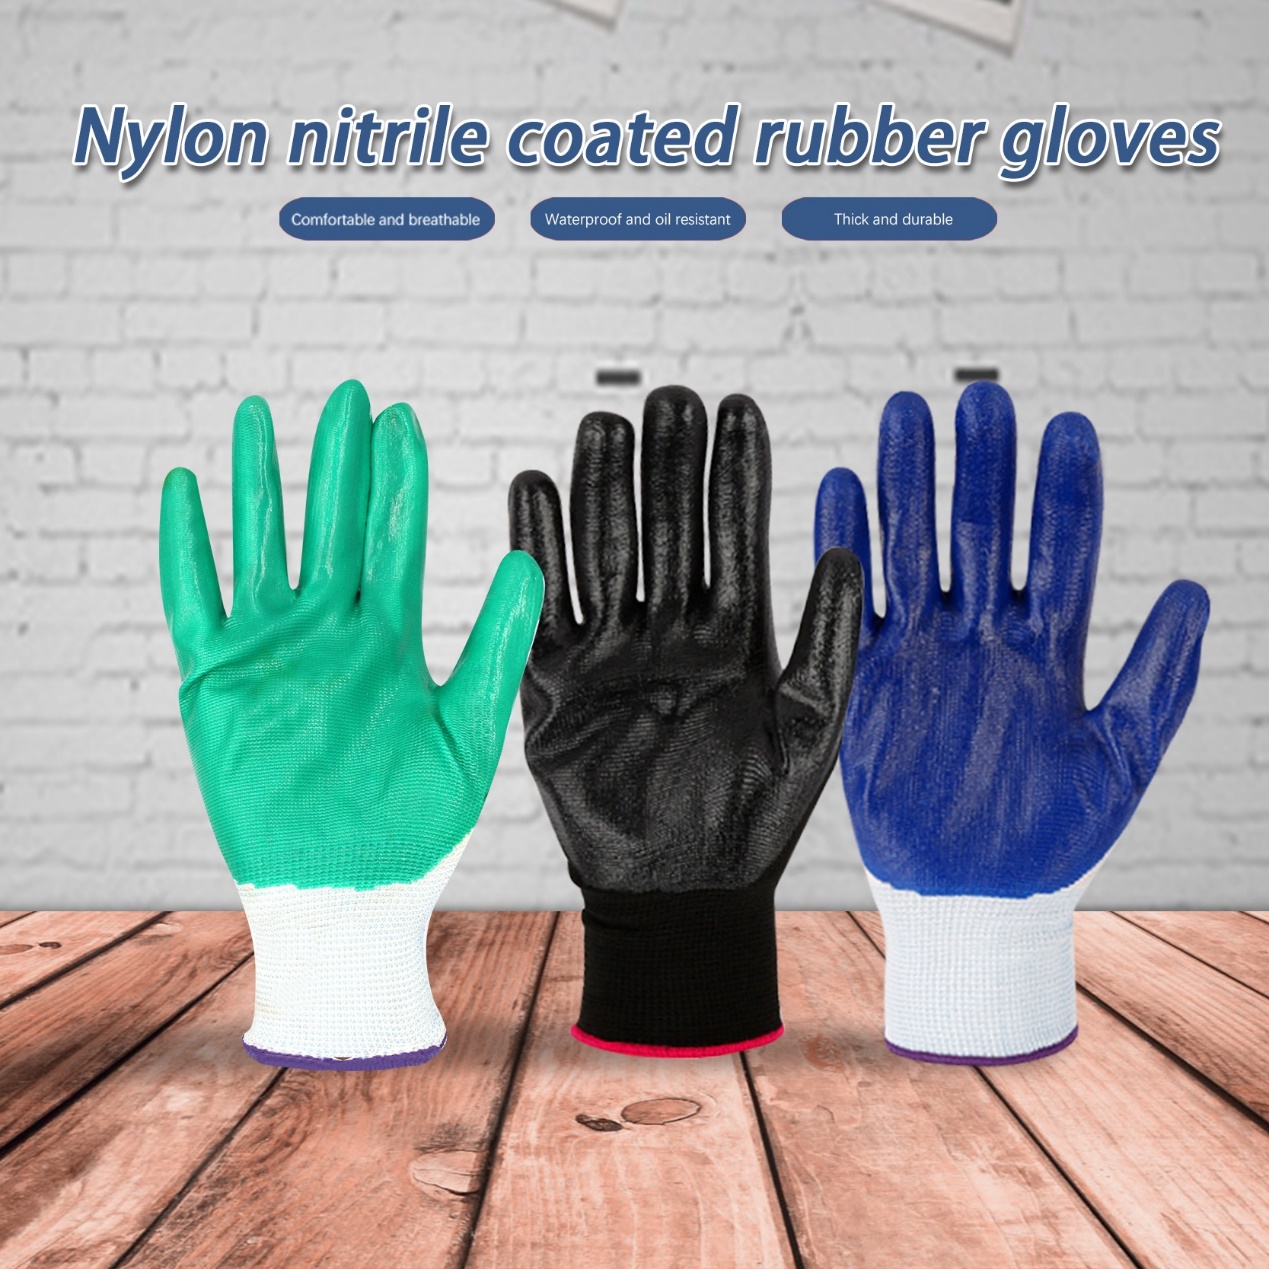 Customizable Blue Dawb Polyester Palm Nitrile Coated Work Gloves